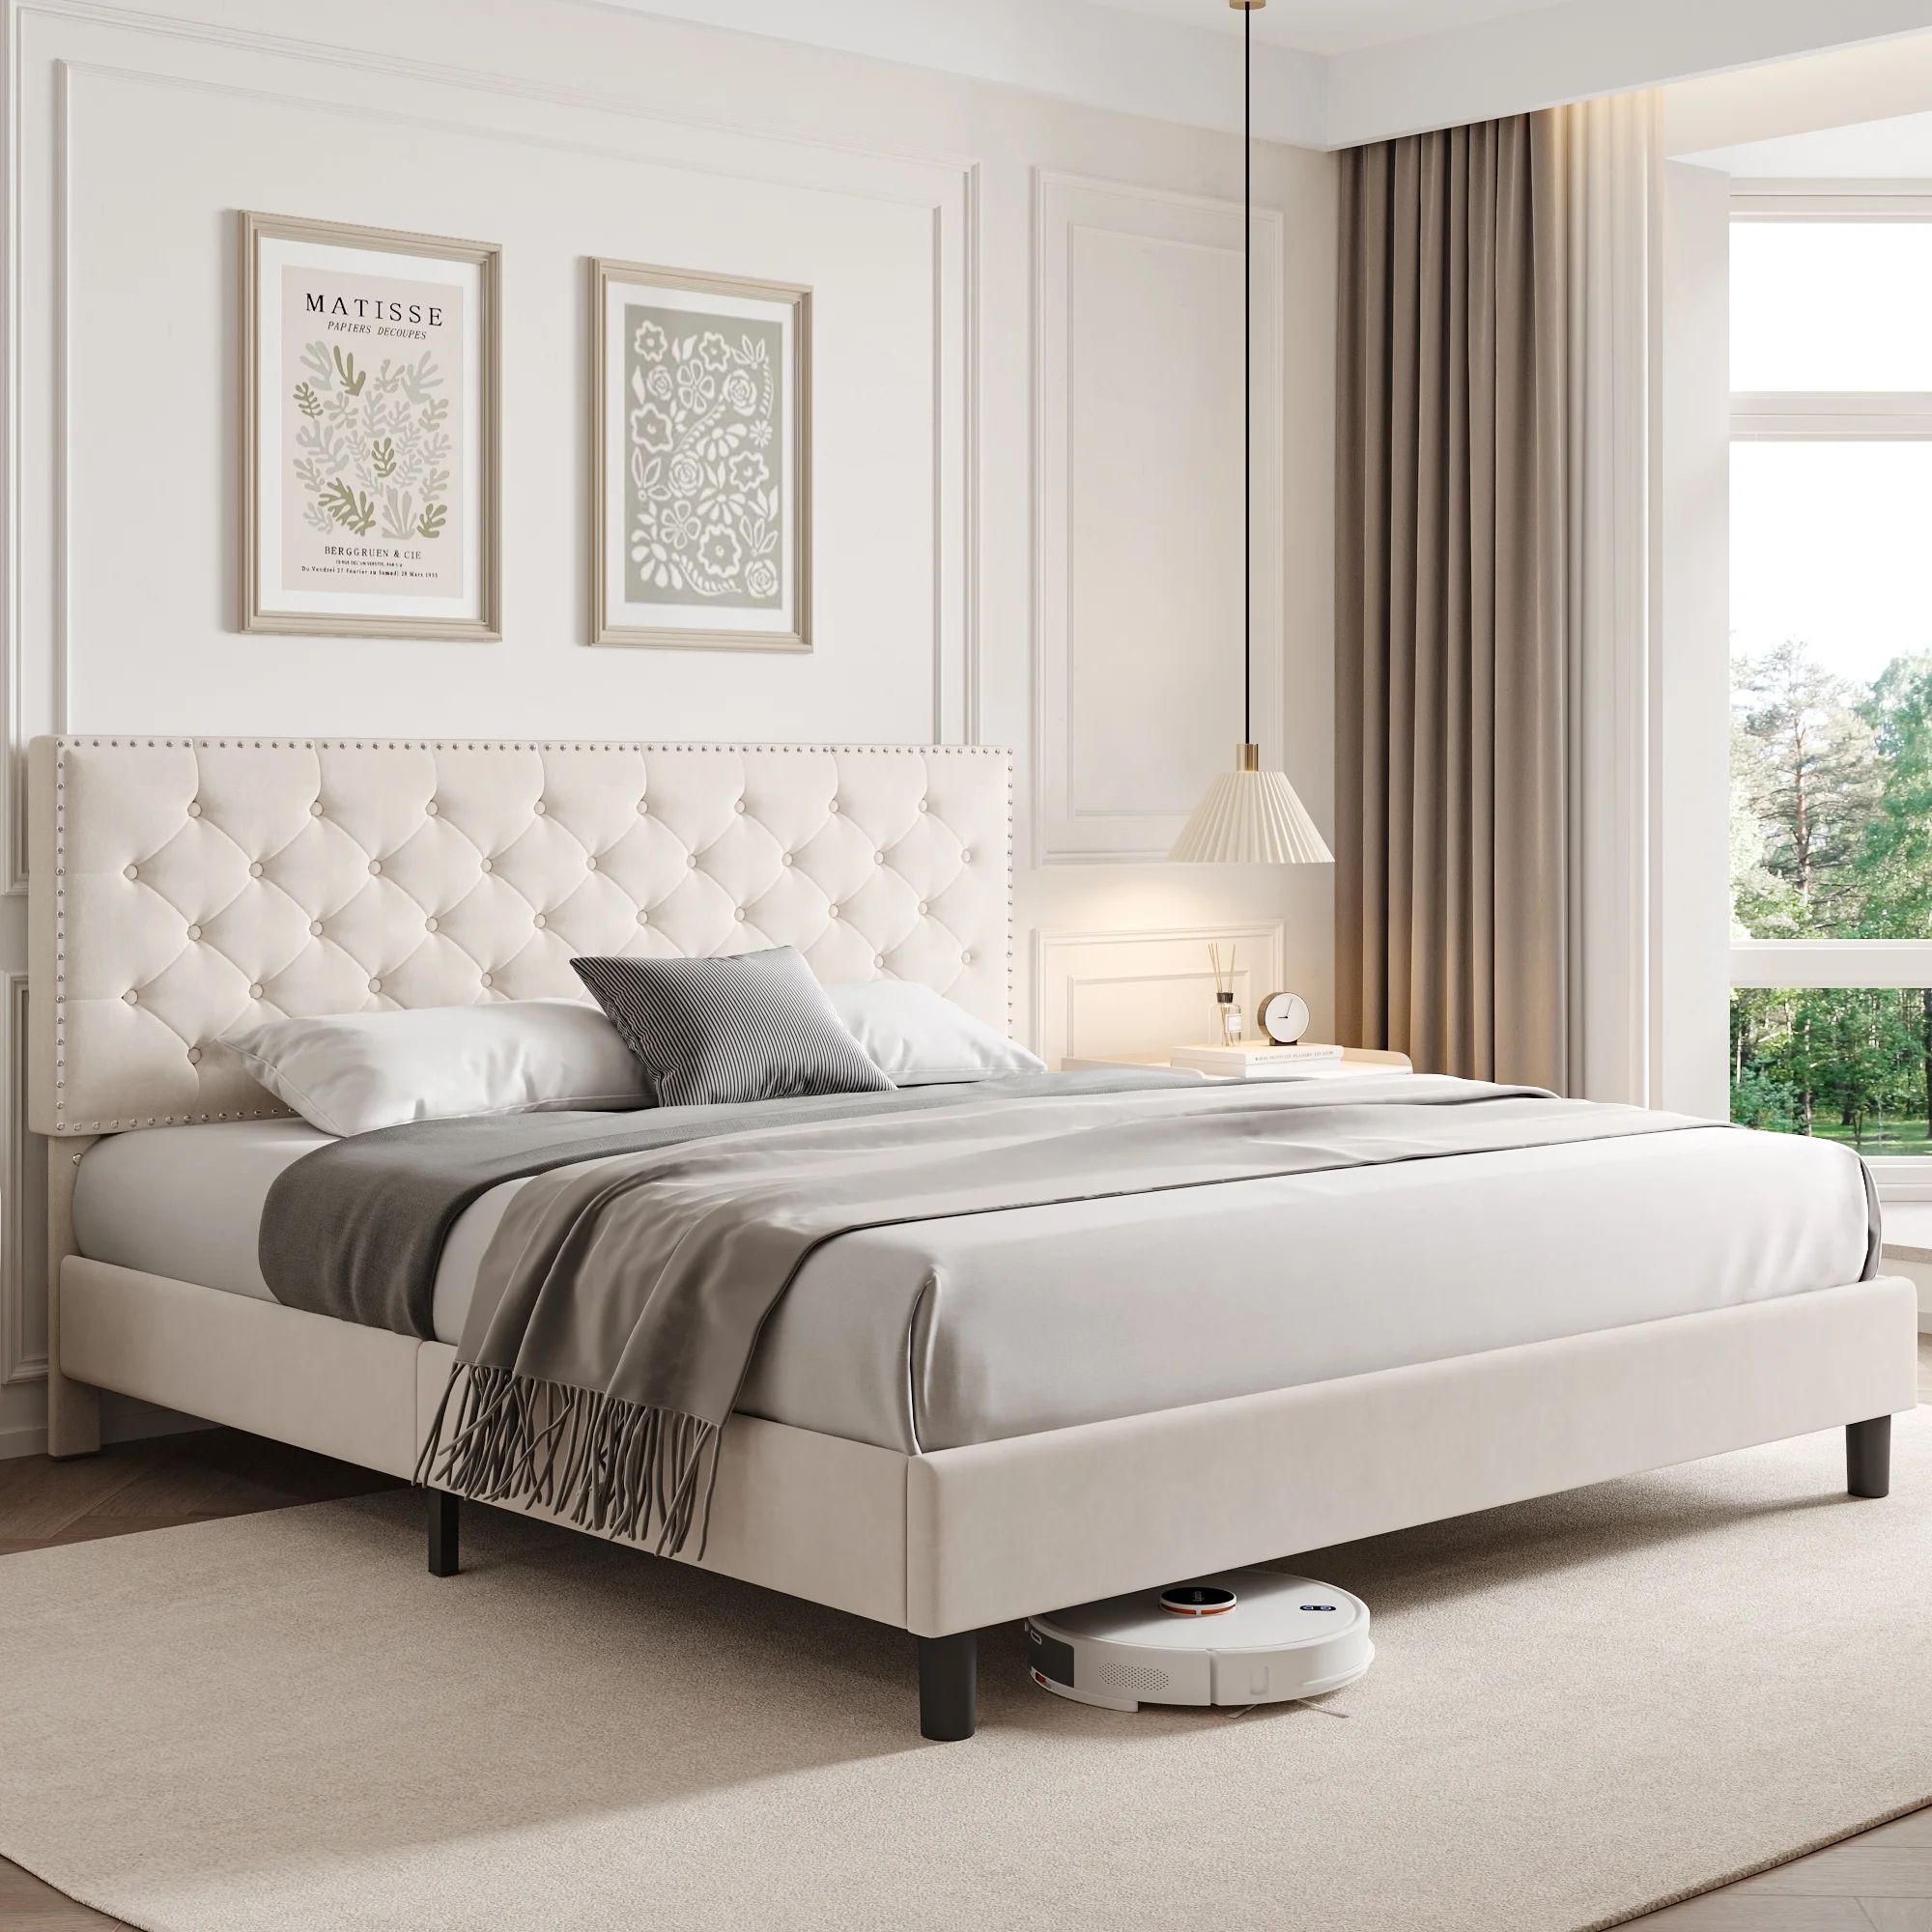 Homfa Queen Size Bed, Modern Upholstered Platform Bed Frame with Adjustable Headboard for Bedroom... | Walmart (US)